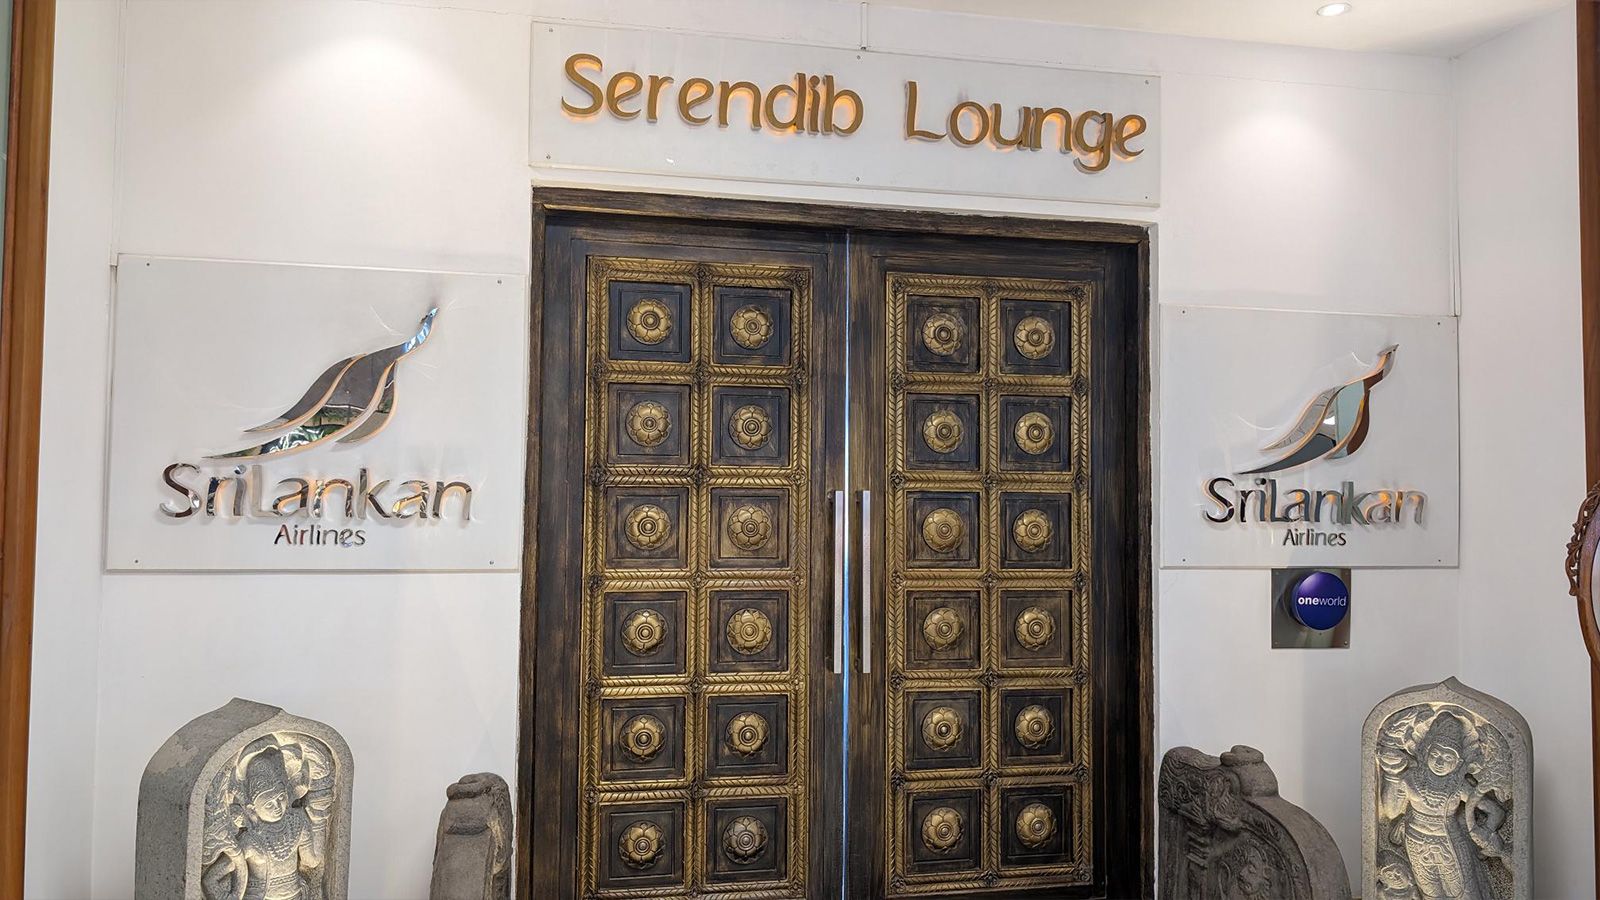 SriLankan Airlines Serendib Lounge, Colombo